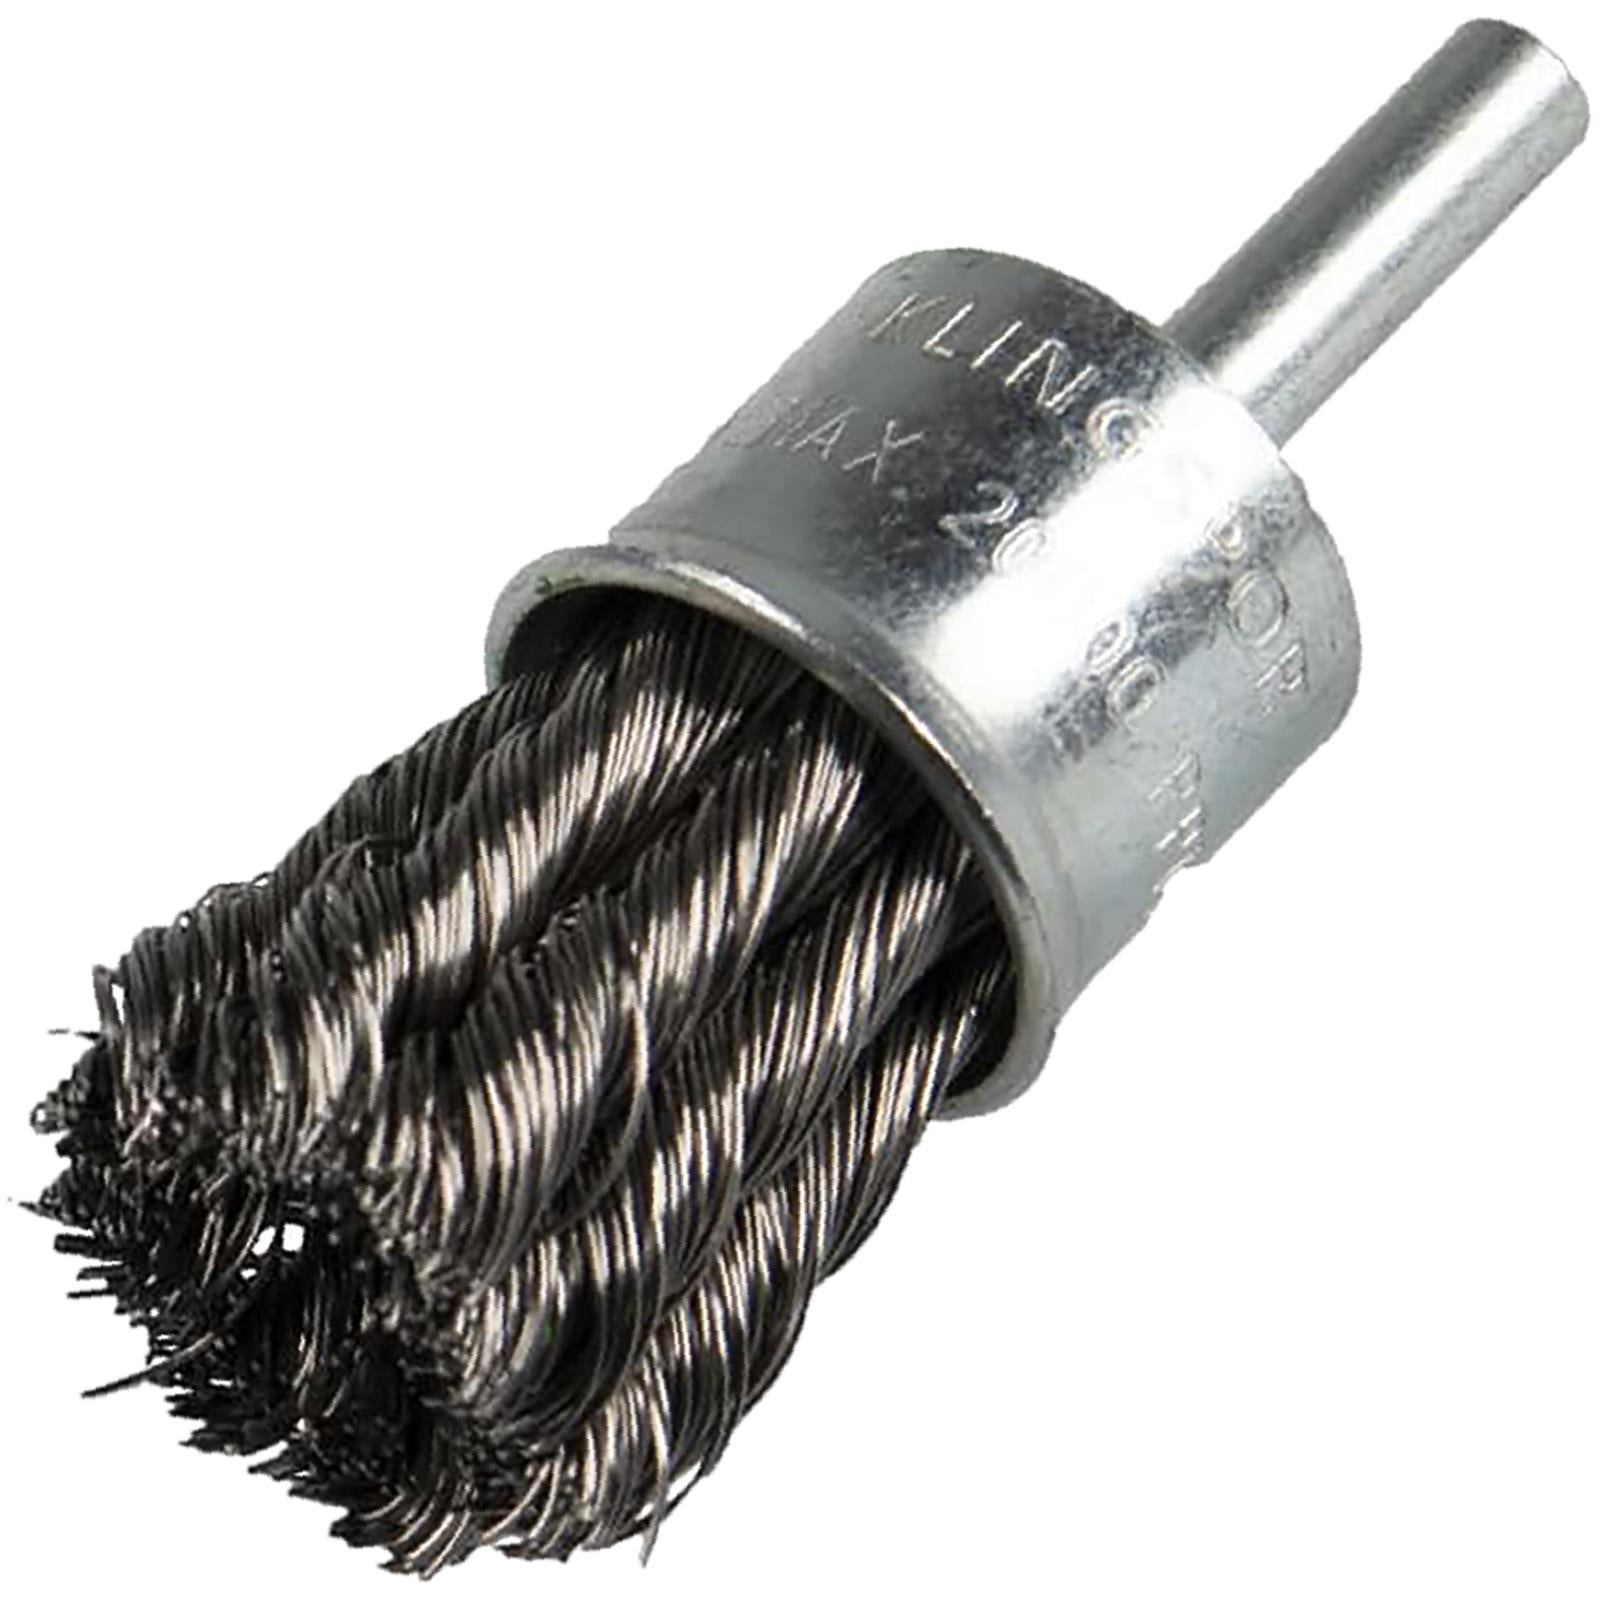 Klingspor Twist Knot Wire End Brush 6mm Shaft 19mm 22mm 30mm Steel BPS600Z